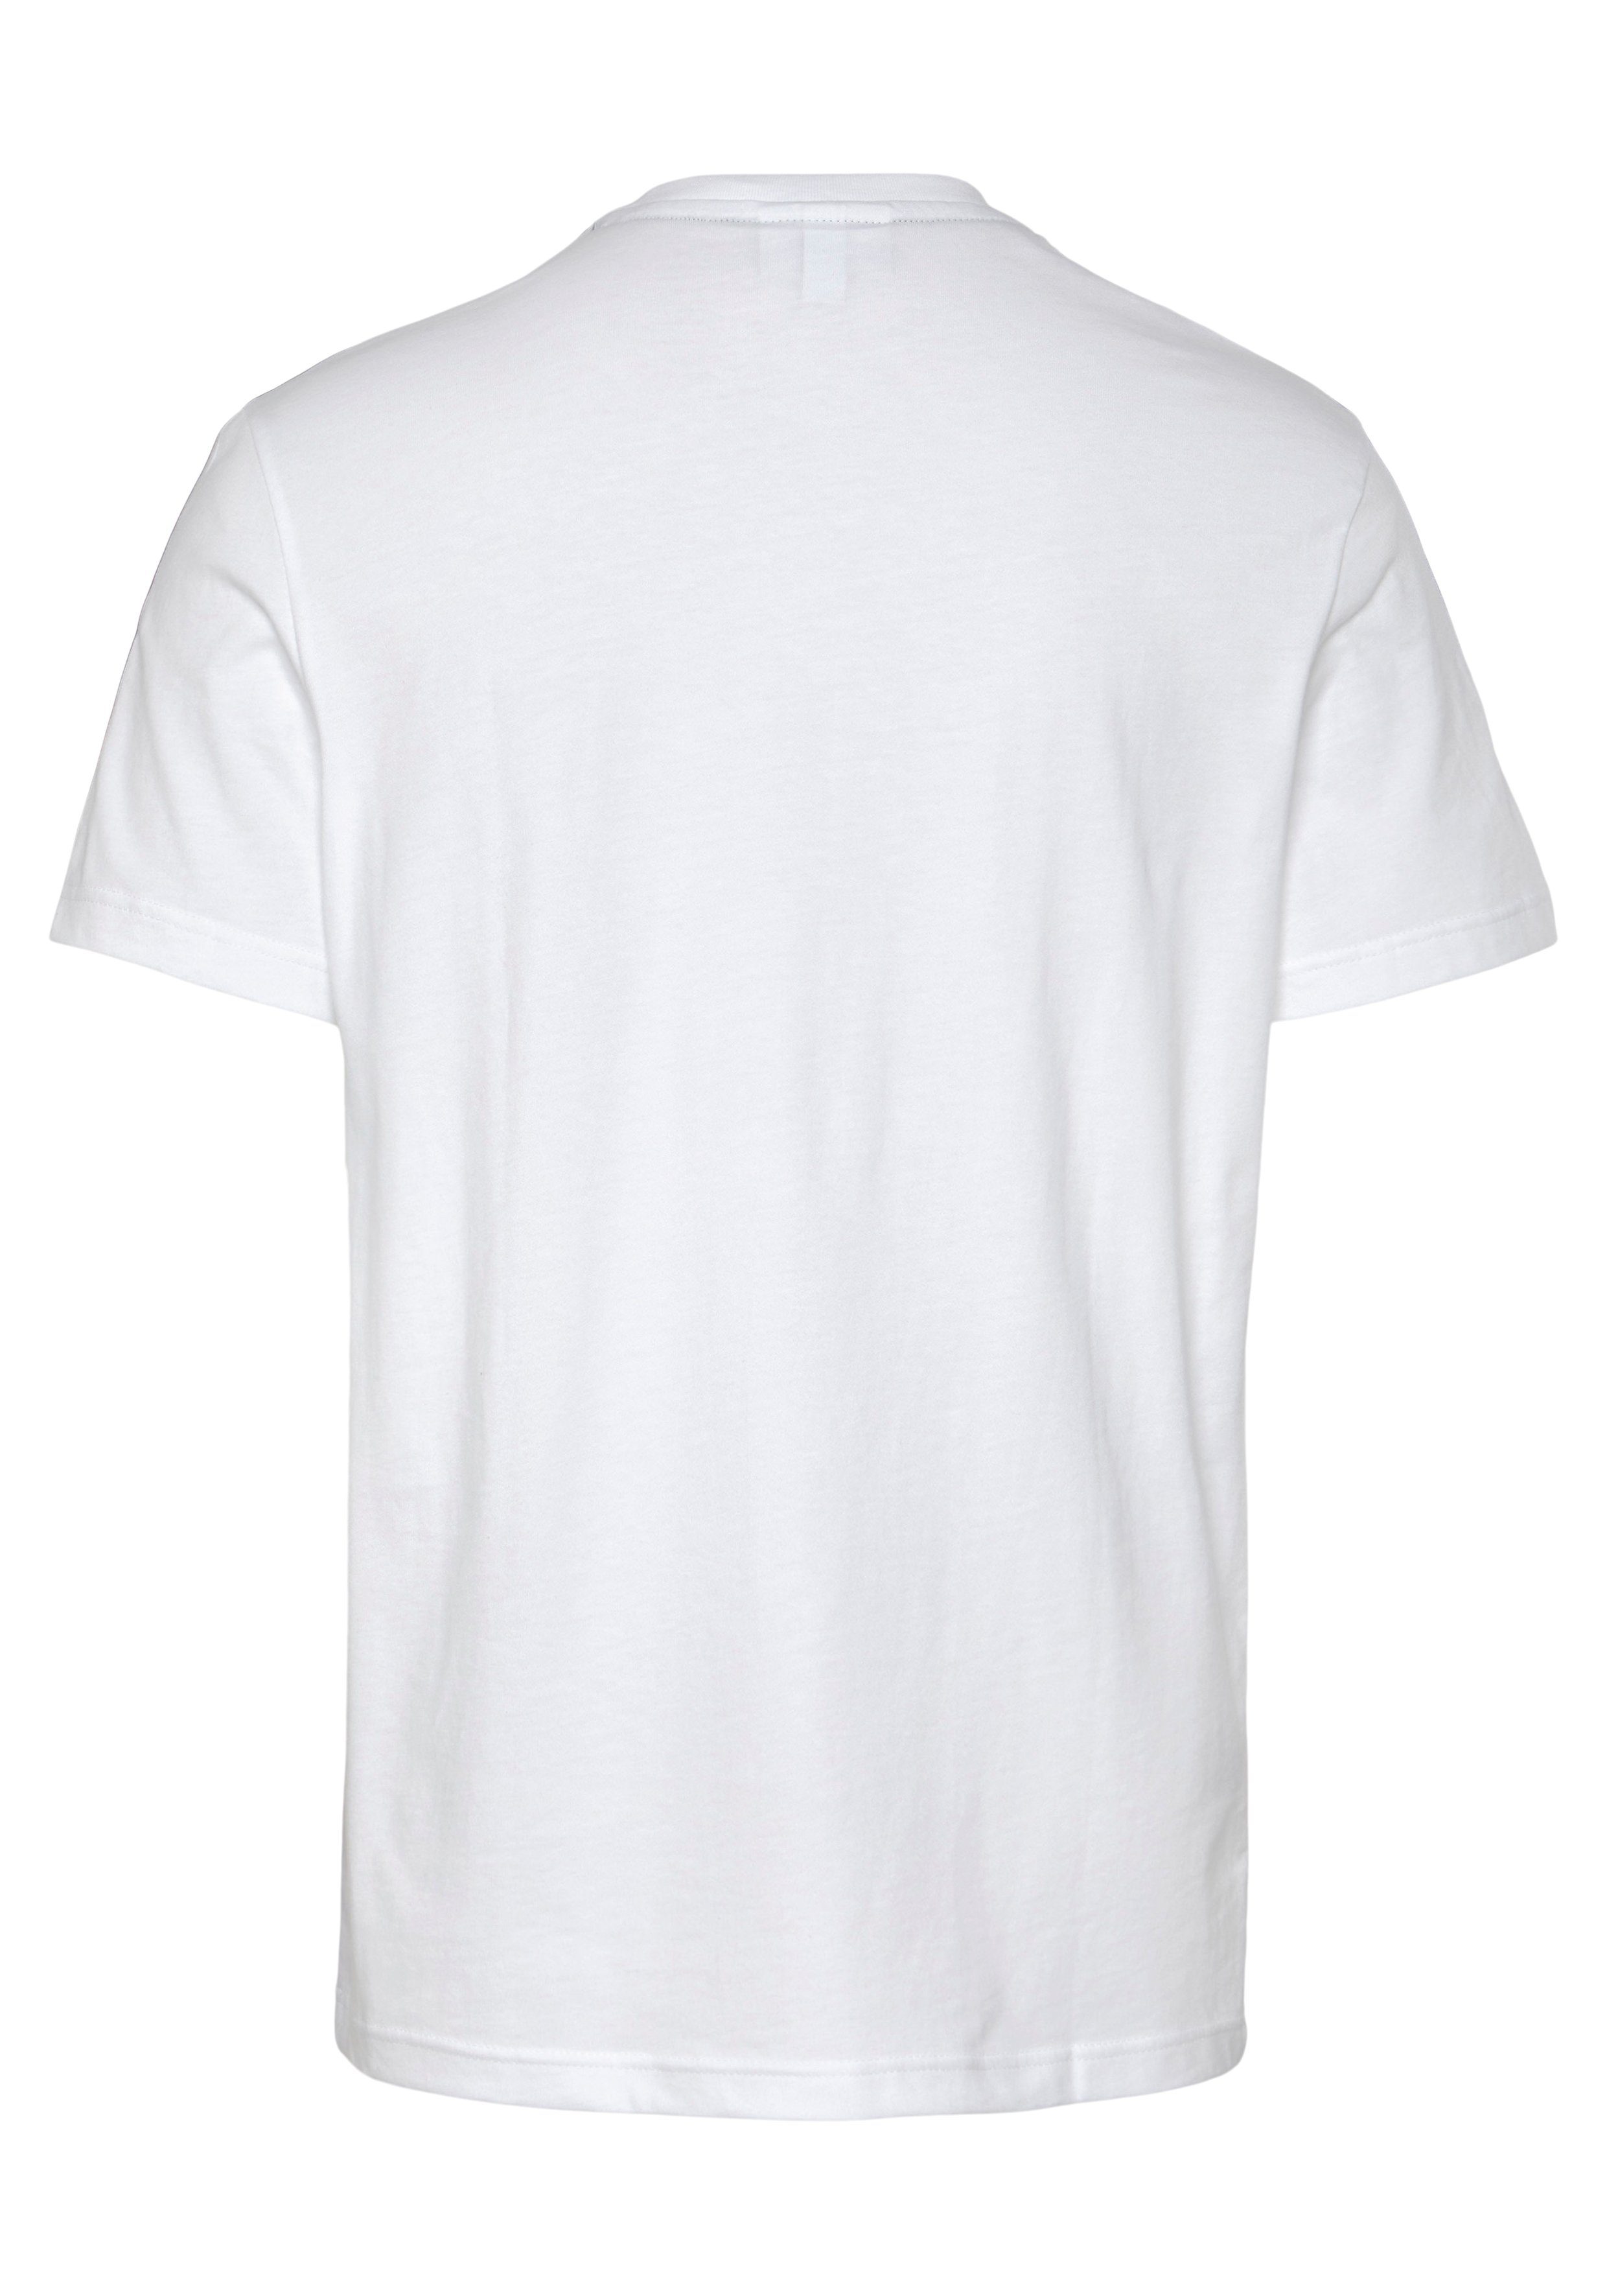 Schultern Kontrastband Lacoste den an white T-Shirt mit beschriftetem